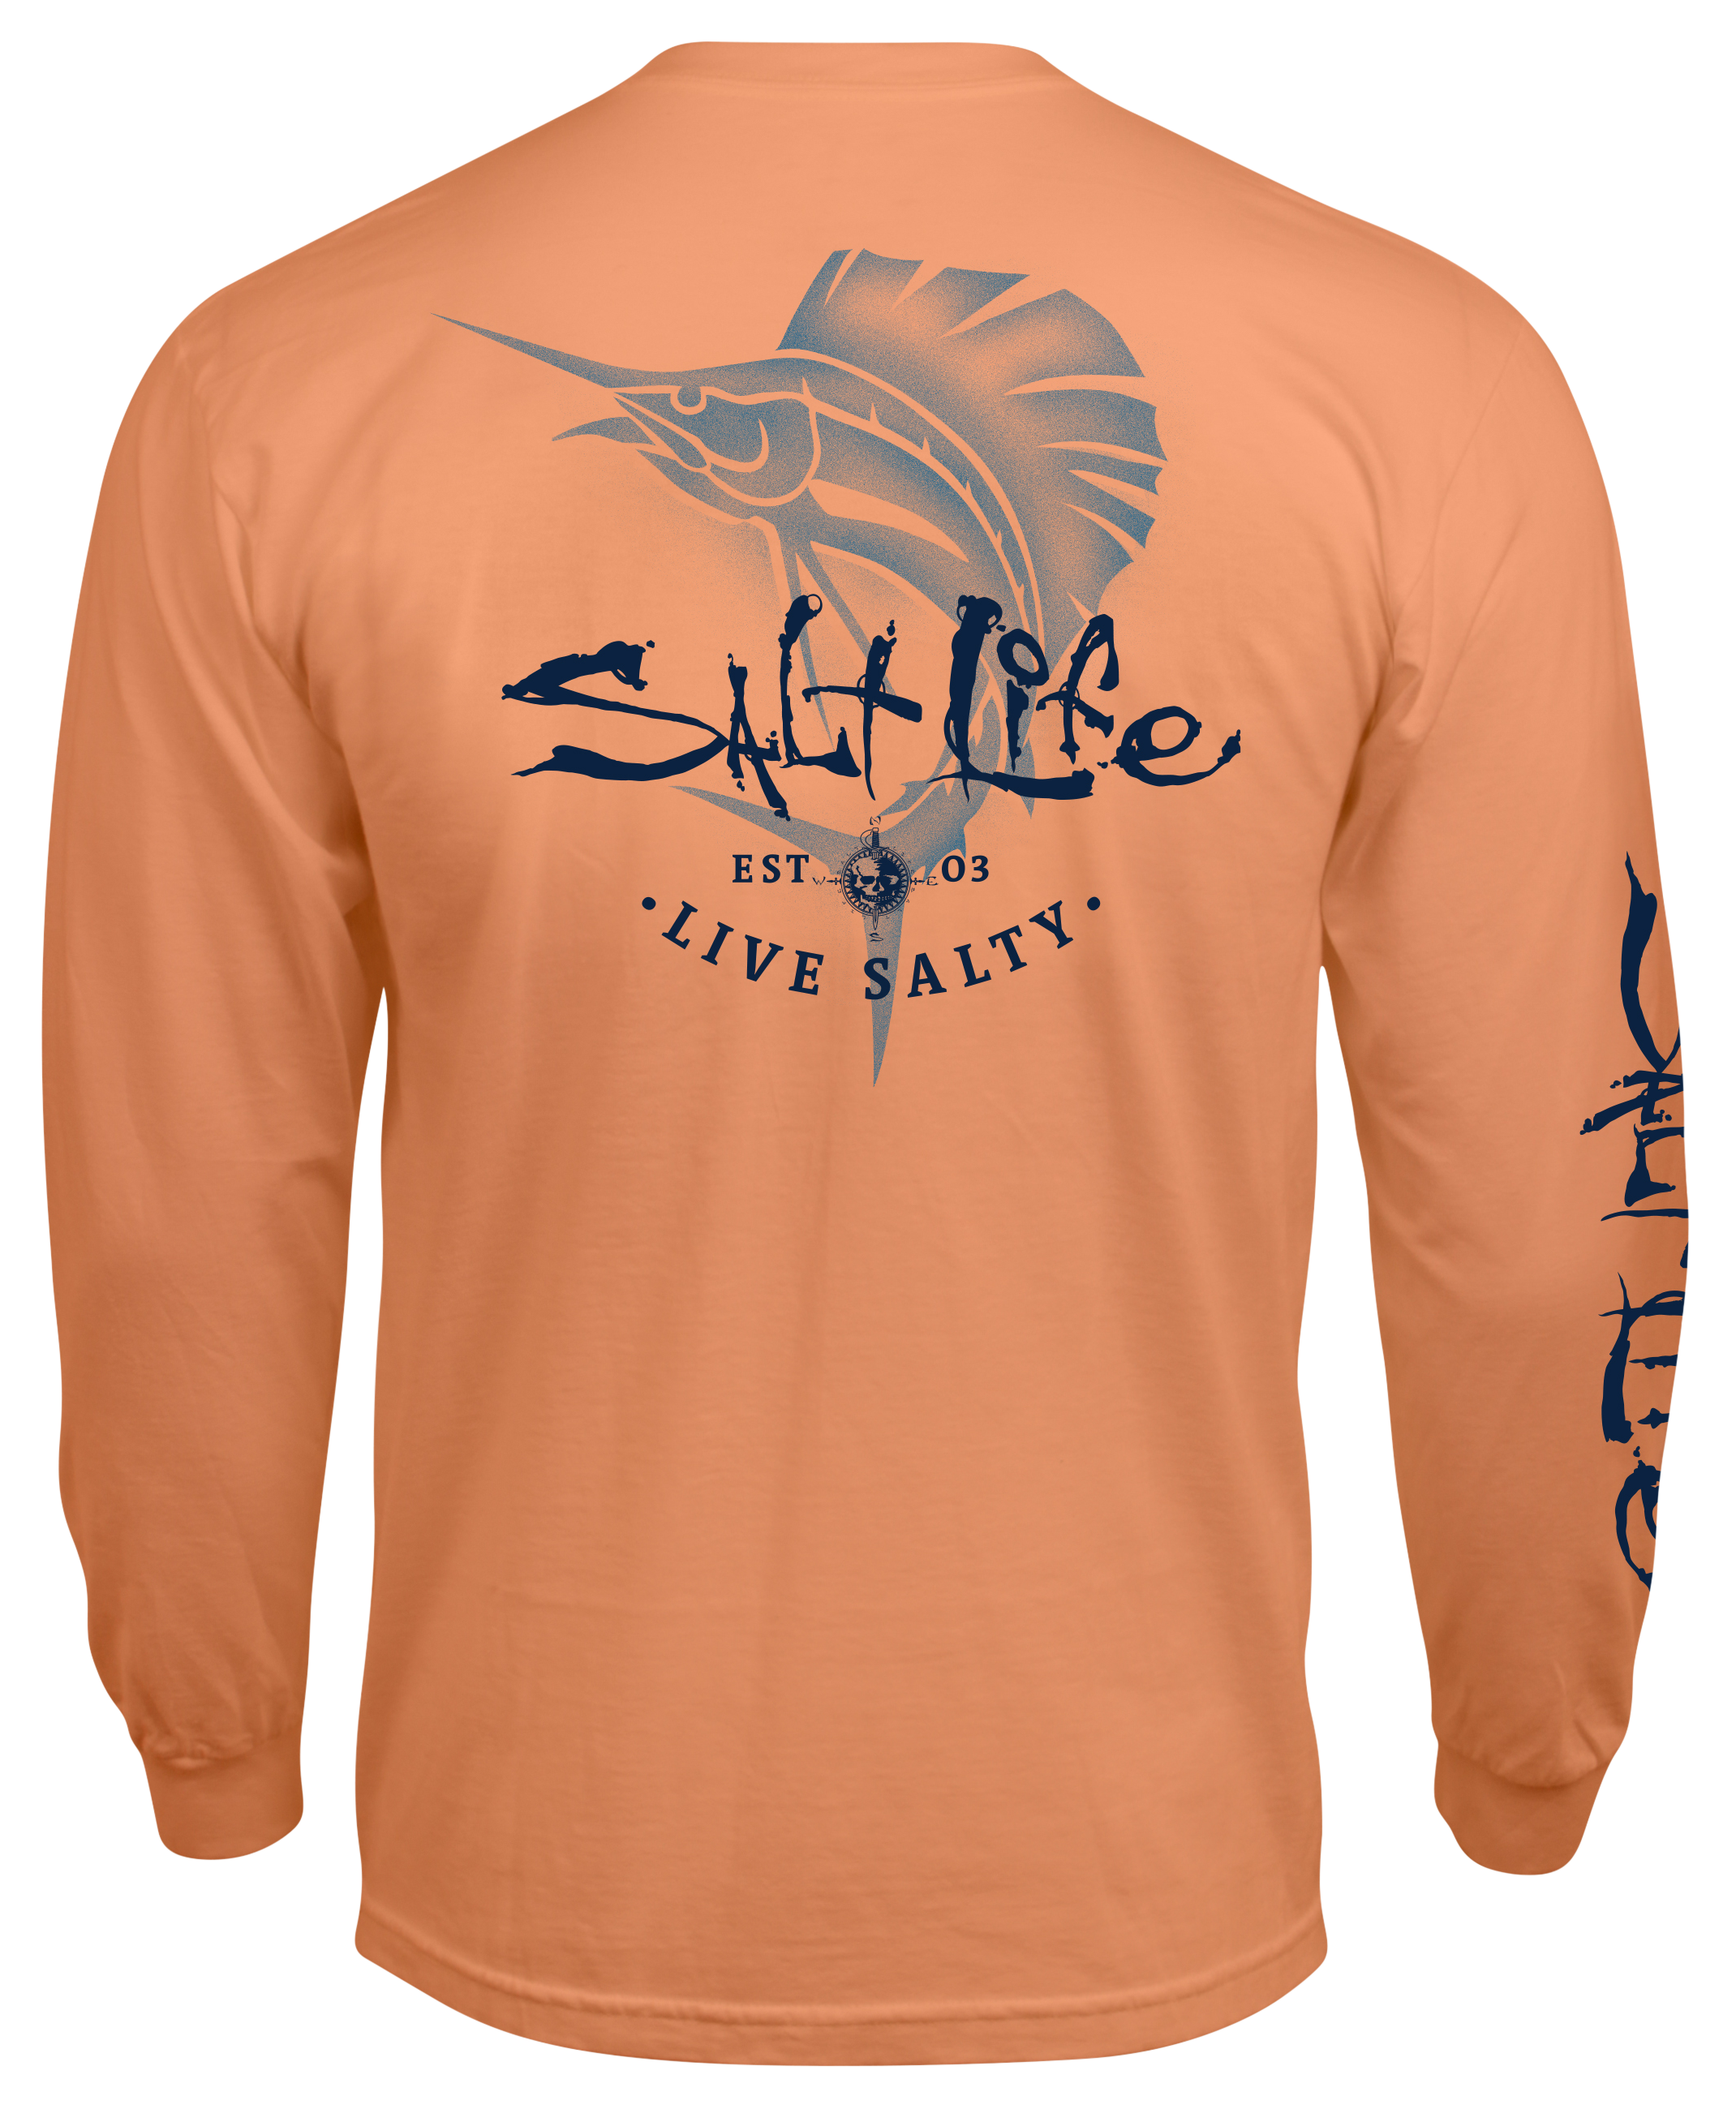 Salt Life Live Salty Long-Sleeve Shirt for Men